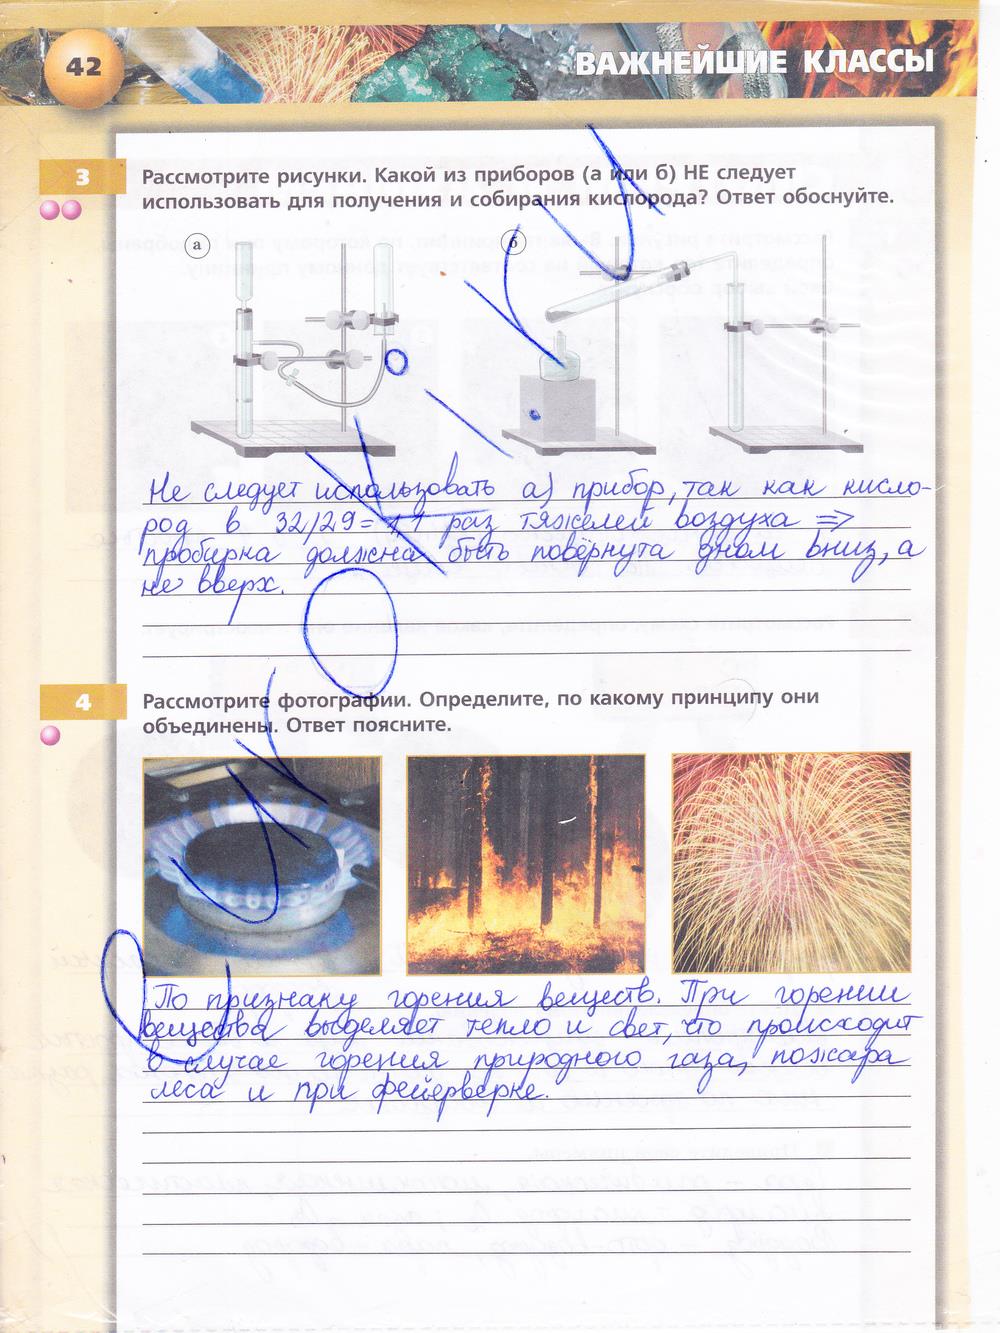 гдз 8 класс тетрадь-тренажёр страница 42 химия Гара